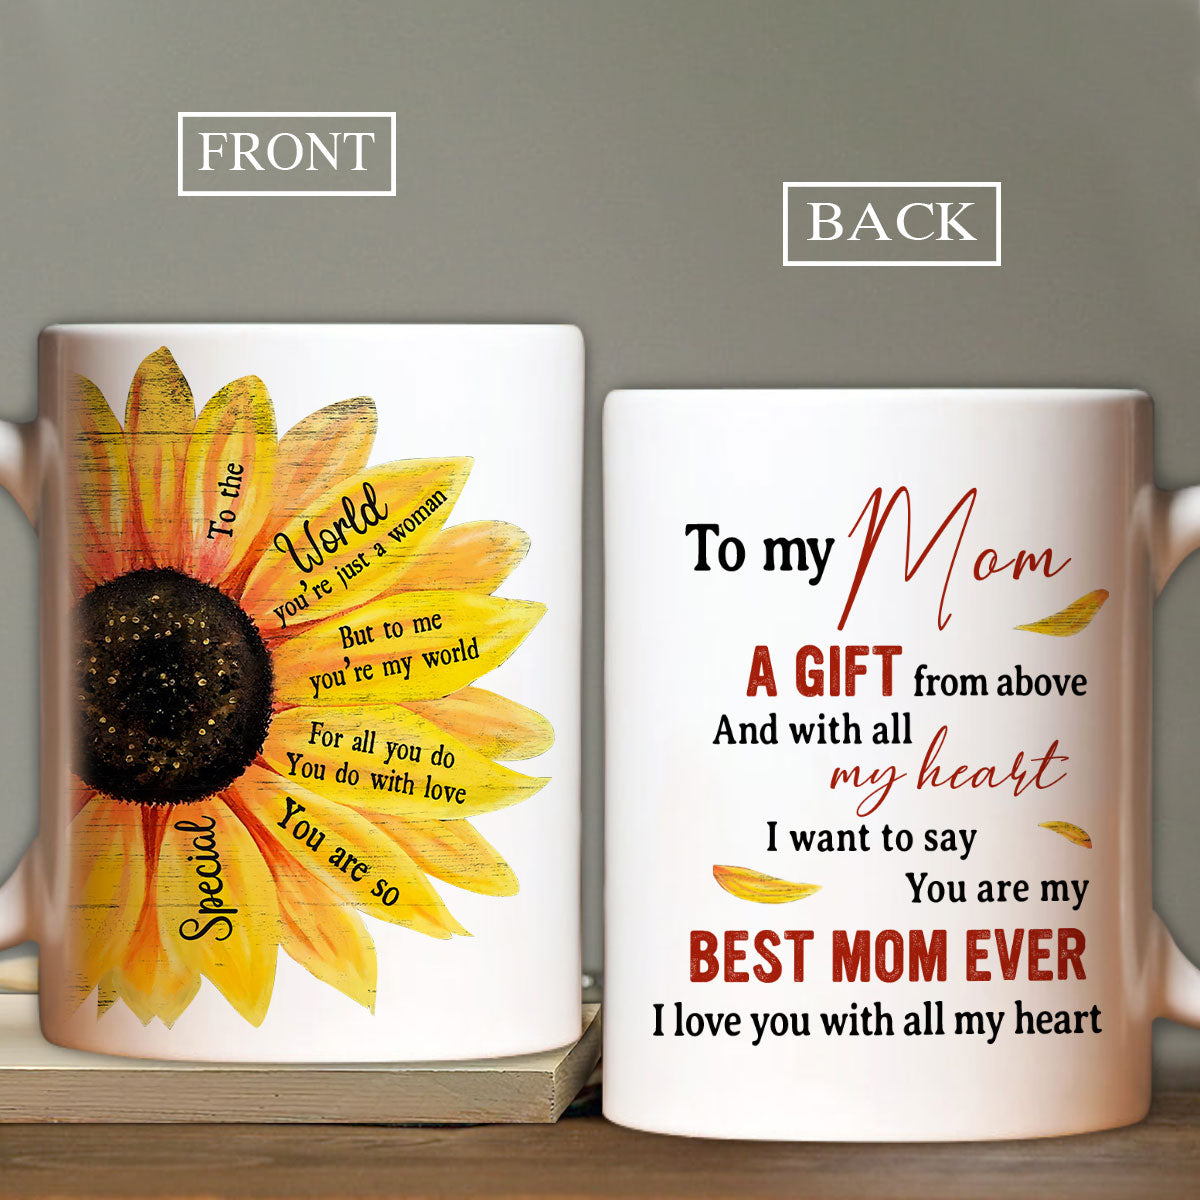 Gift For Mom Mug - Daughter to mom, Big sunflower Mug - Gift For Mom From Daughter Son, Mothers Day, Anniversary, Presents for Mom - Best mom ever Mug